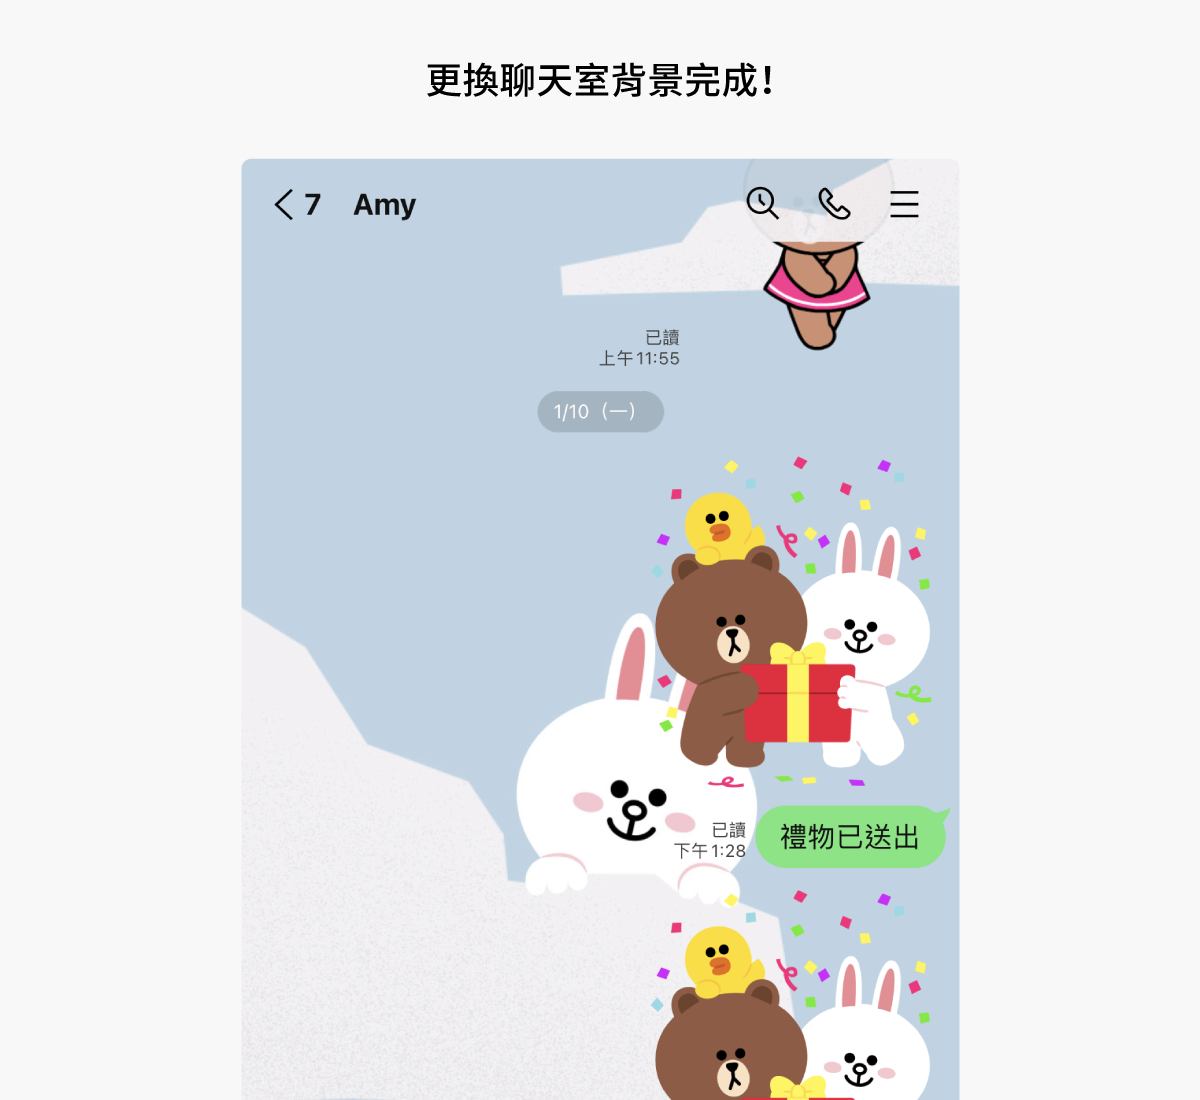 LINE 多人聊天室 / 群組整合新上線！視覺統一、功能升級，使用更方便！ : LINE台灣 官方BLOG